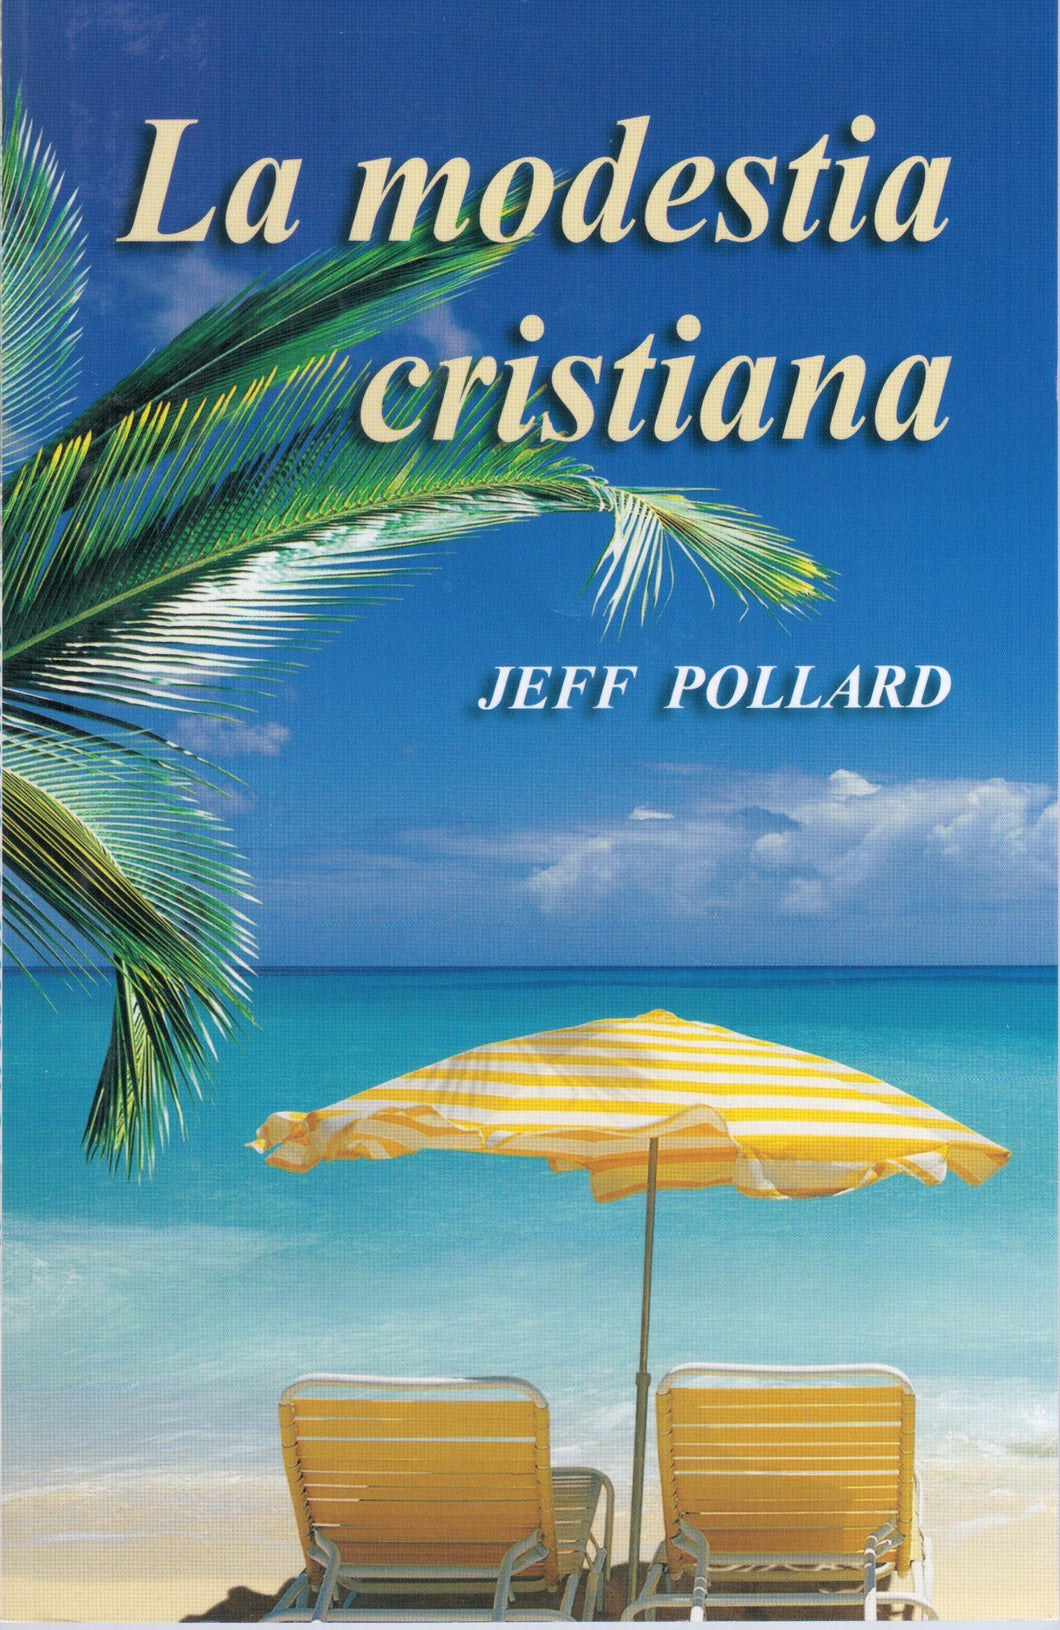 La modestia cristiana | Jeff Pollard | Publicaciones Aquila 